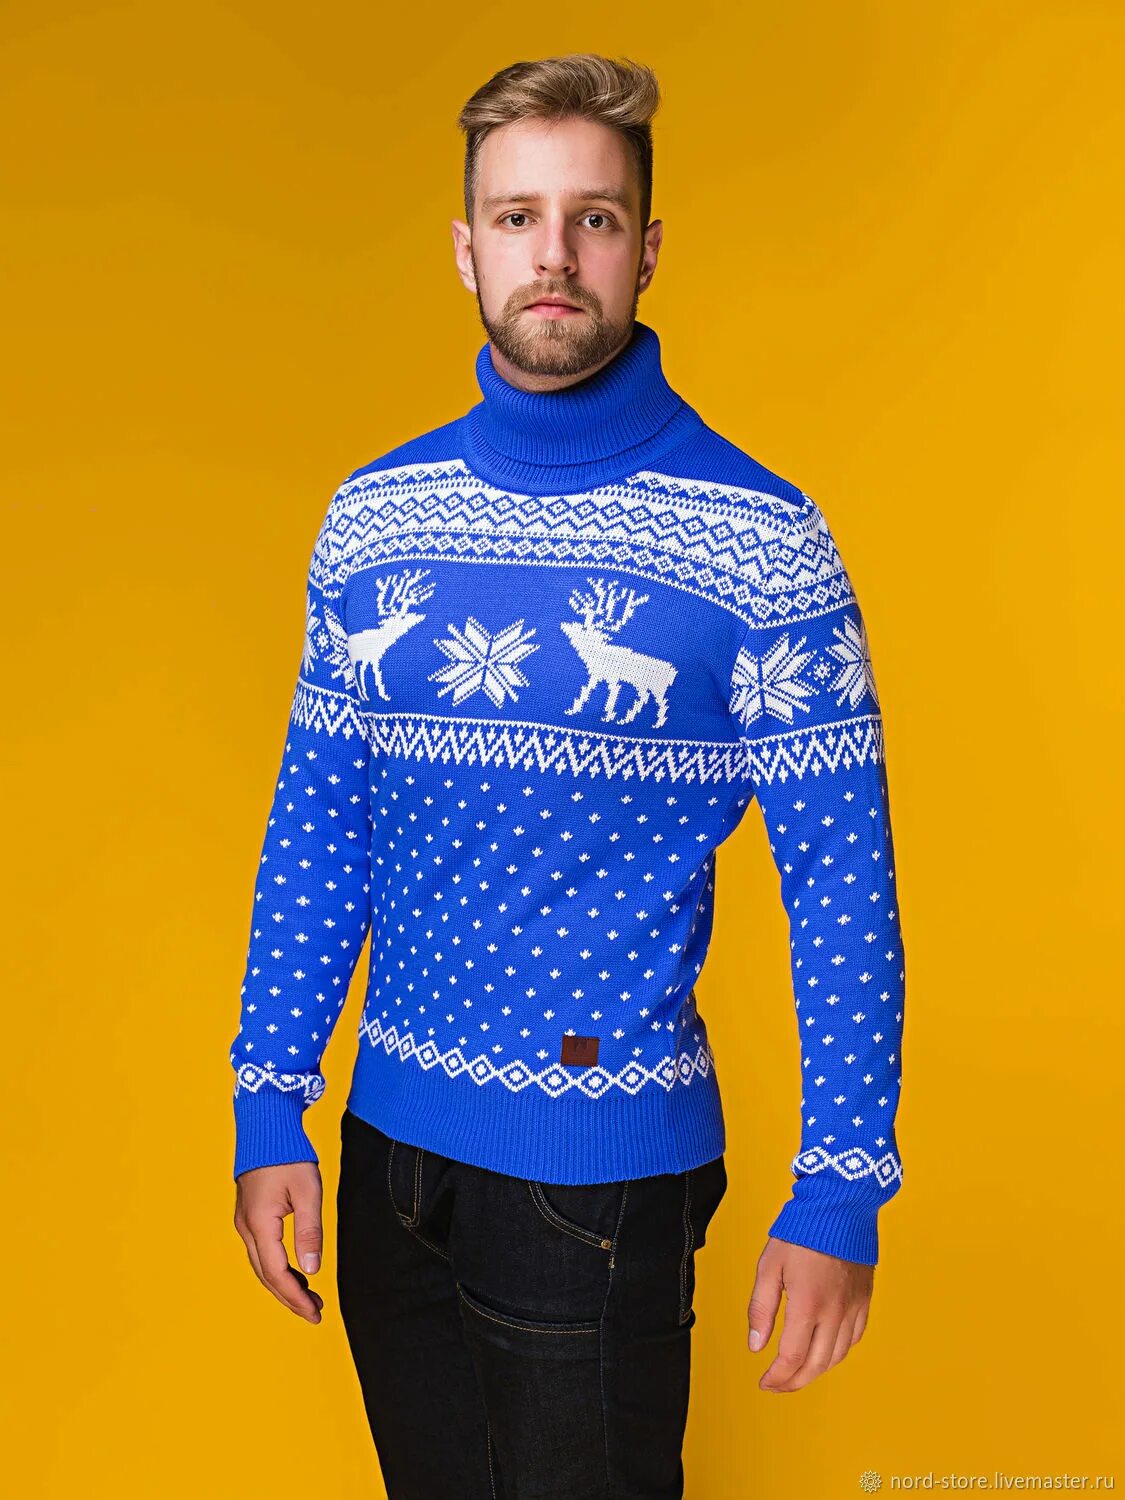 Мужской свитер спб. Новогодний свитер синий. Голубой новогодний свитер.